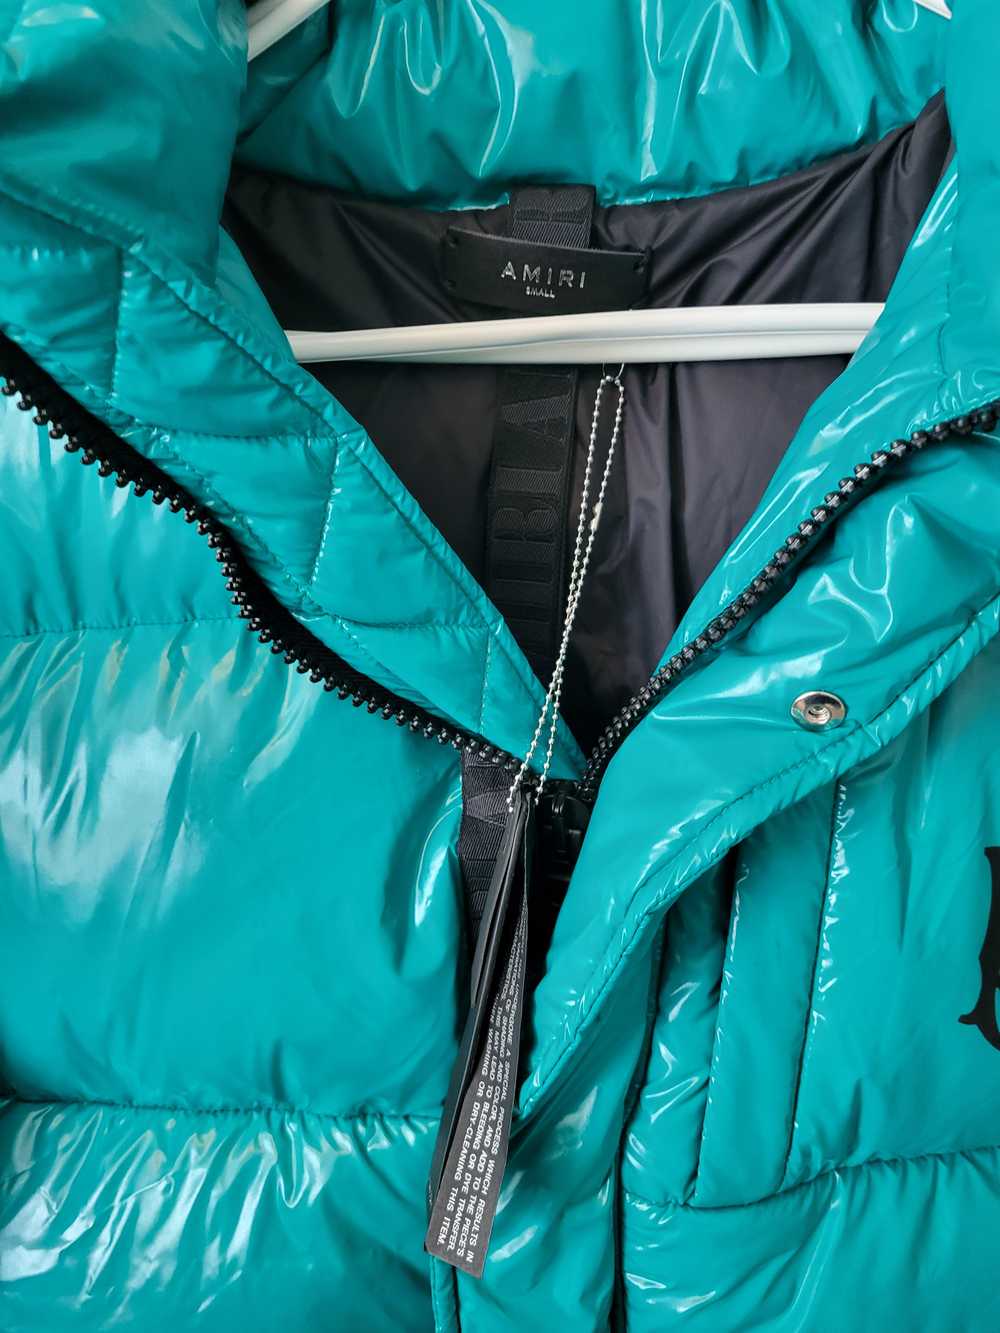 Amiri Teal Oversized Puffer Jacket Size Small - image 4